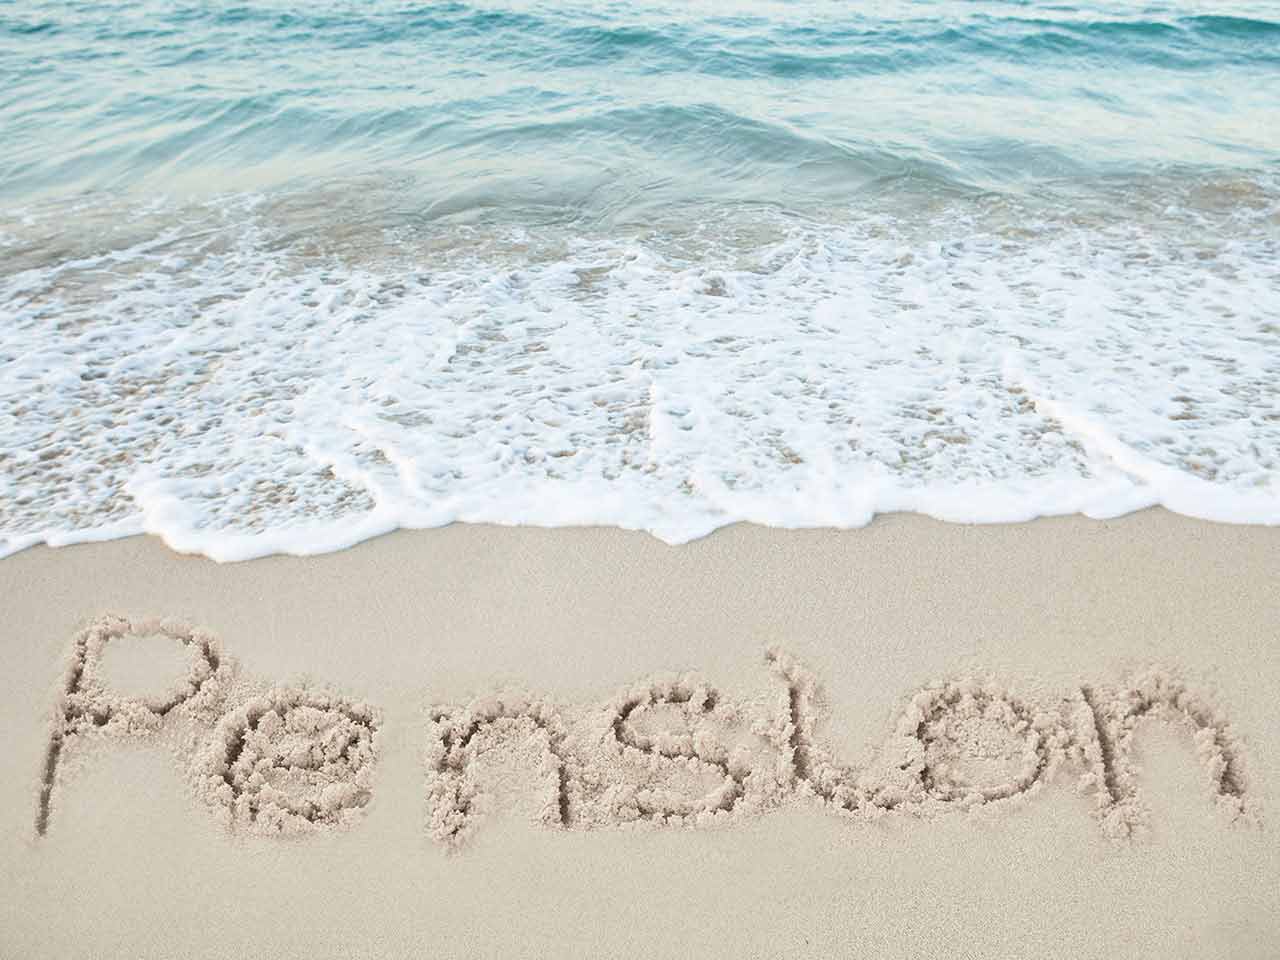 Pension written in sand